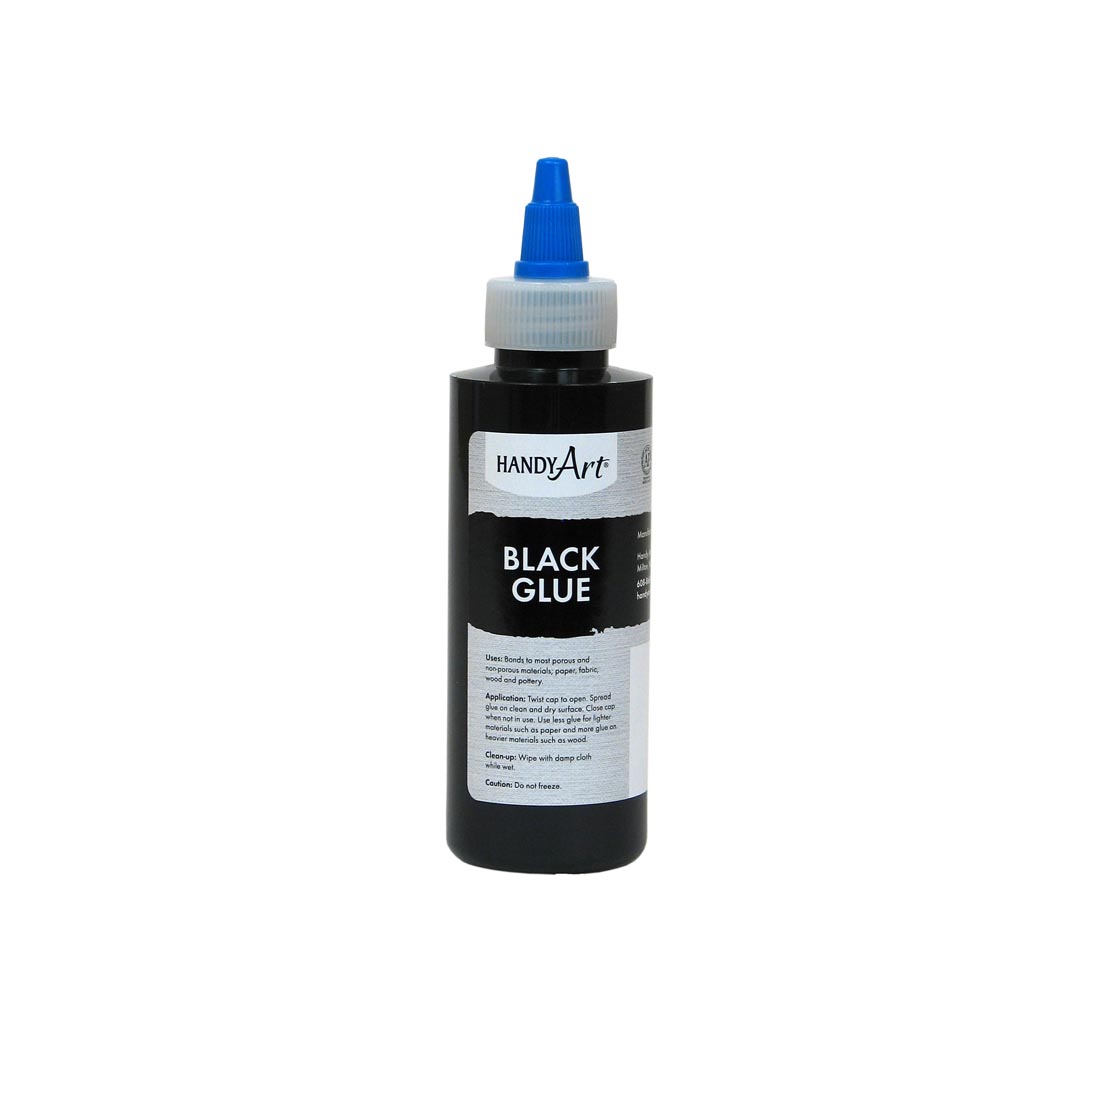 Handy Art Black Glue Bottle